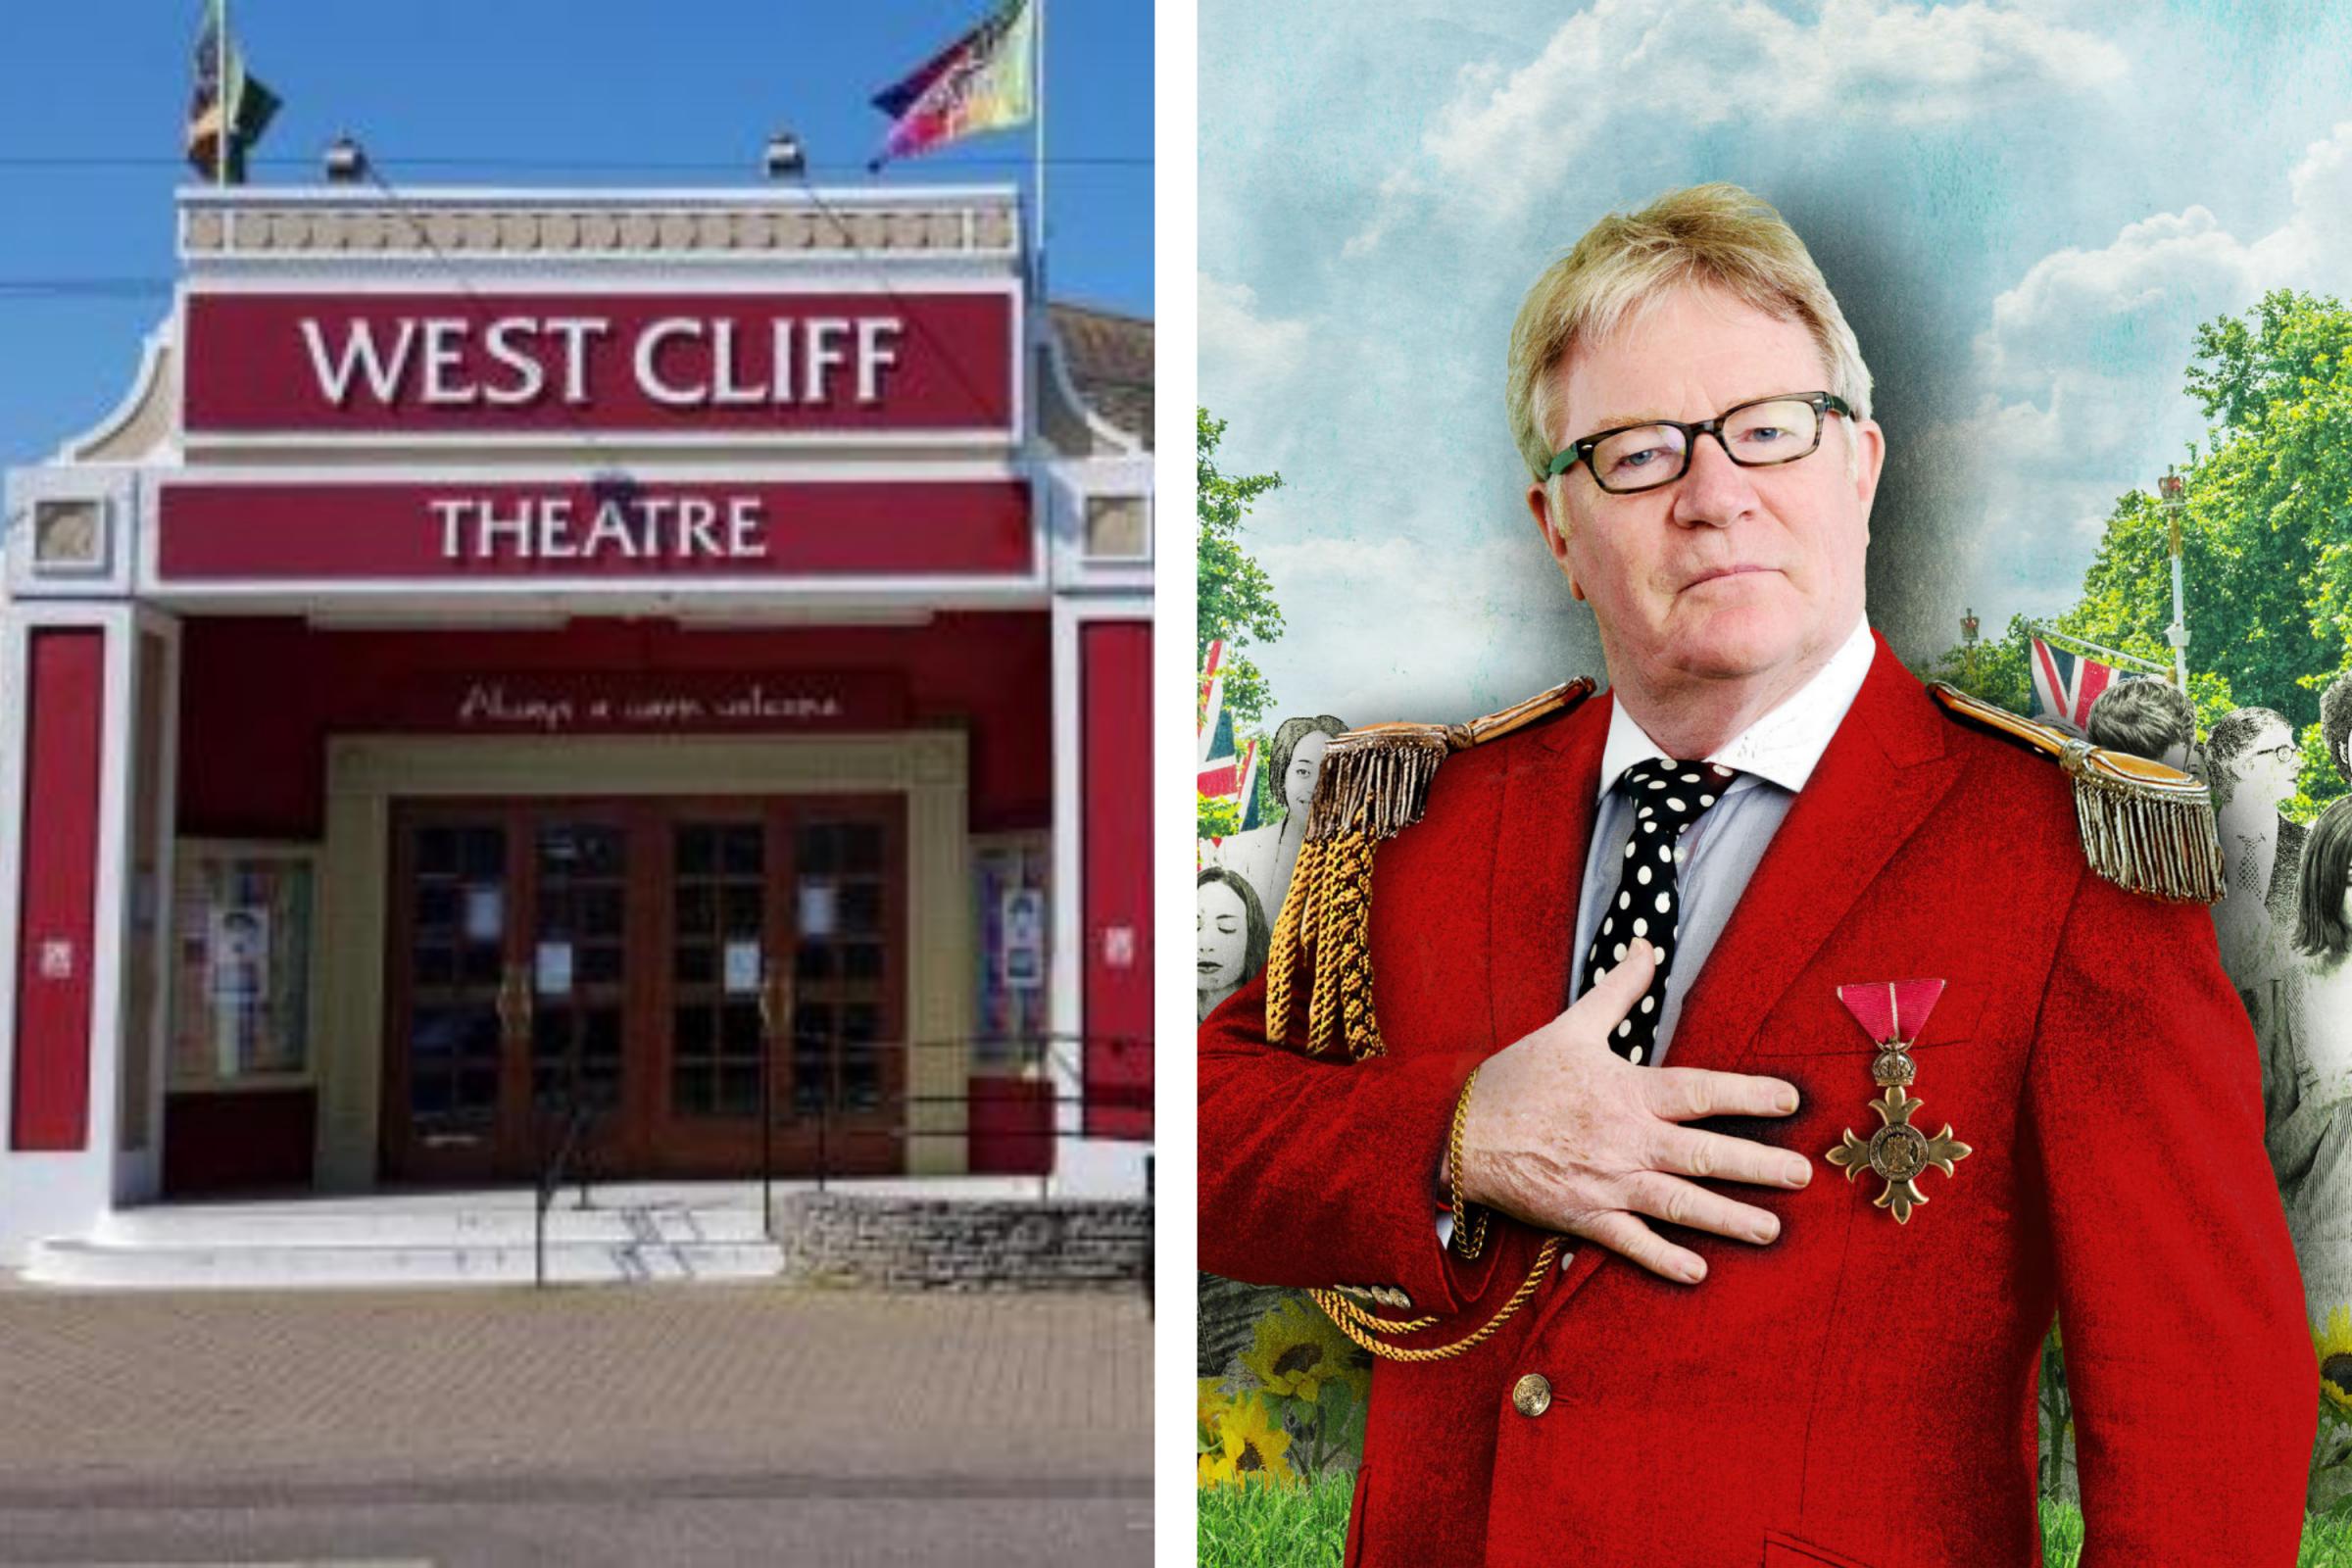 Comedian Jim Davidson to perform at Clacton's West Cliff Theatre